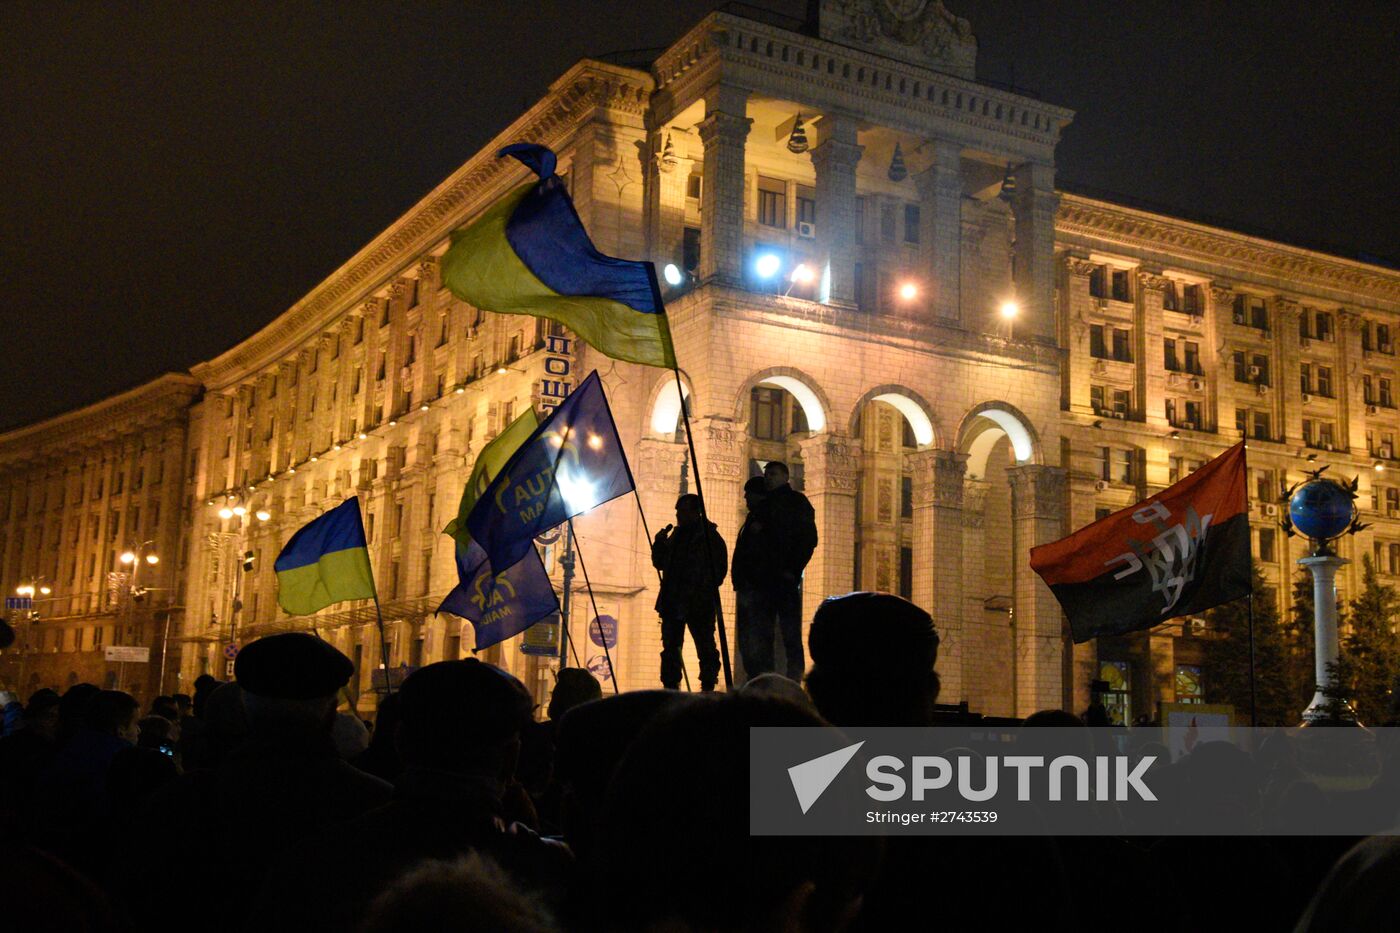 Anniversary of Maidan in Kiev